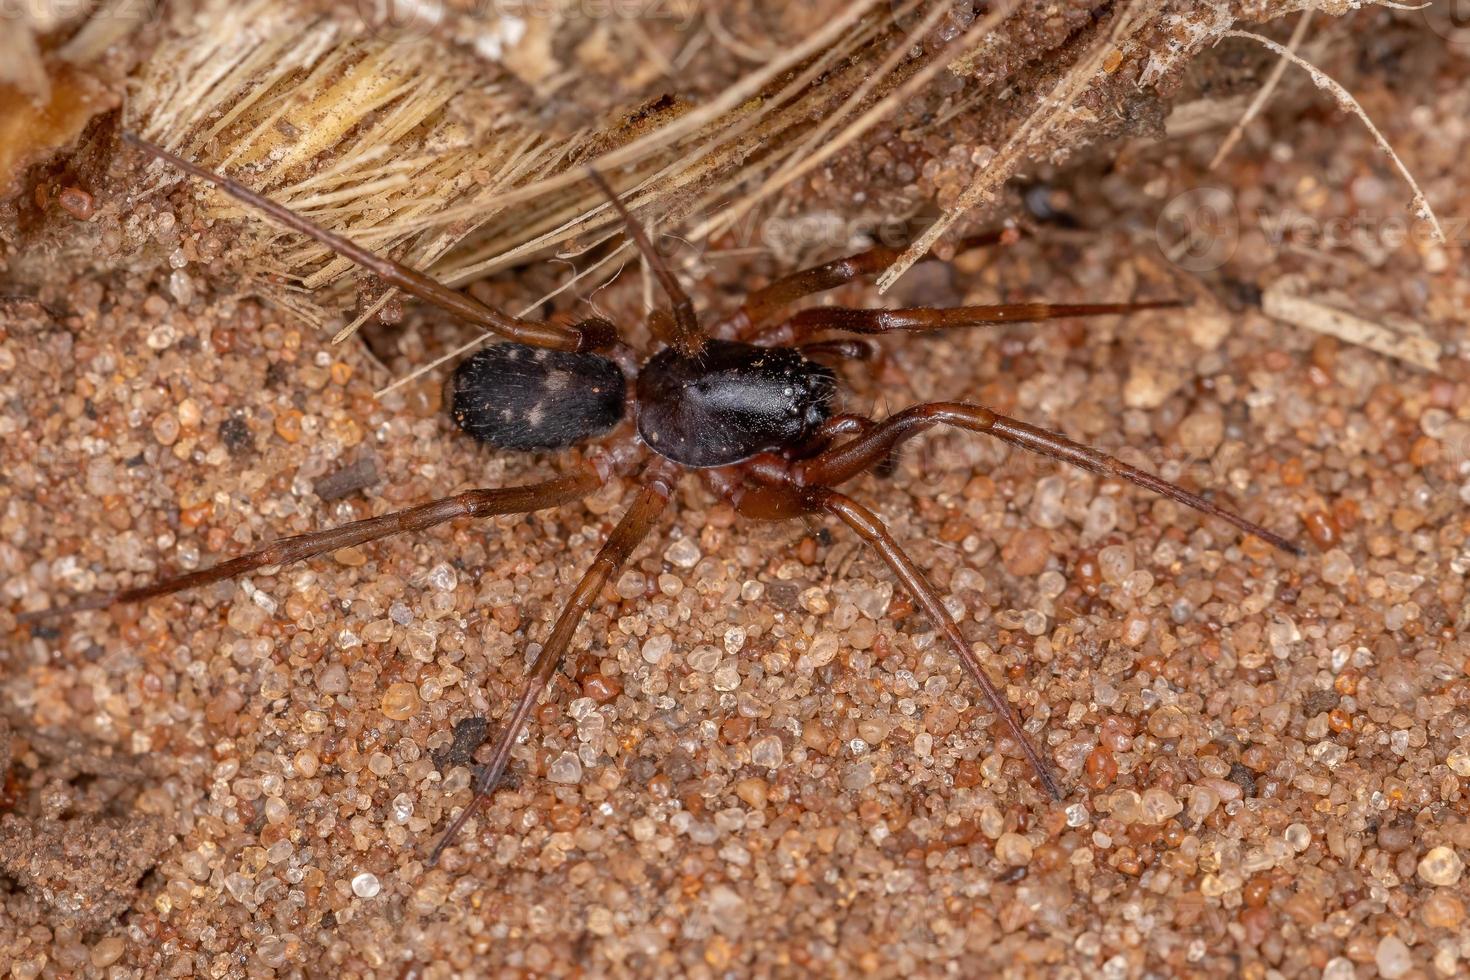 Ant mimic Sac Spider photo